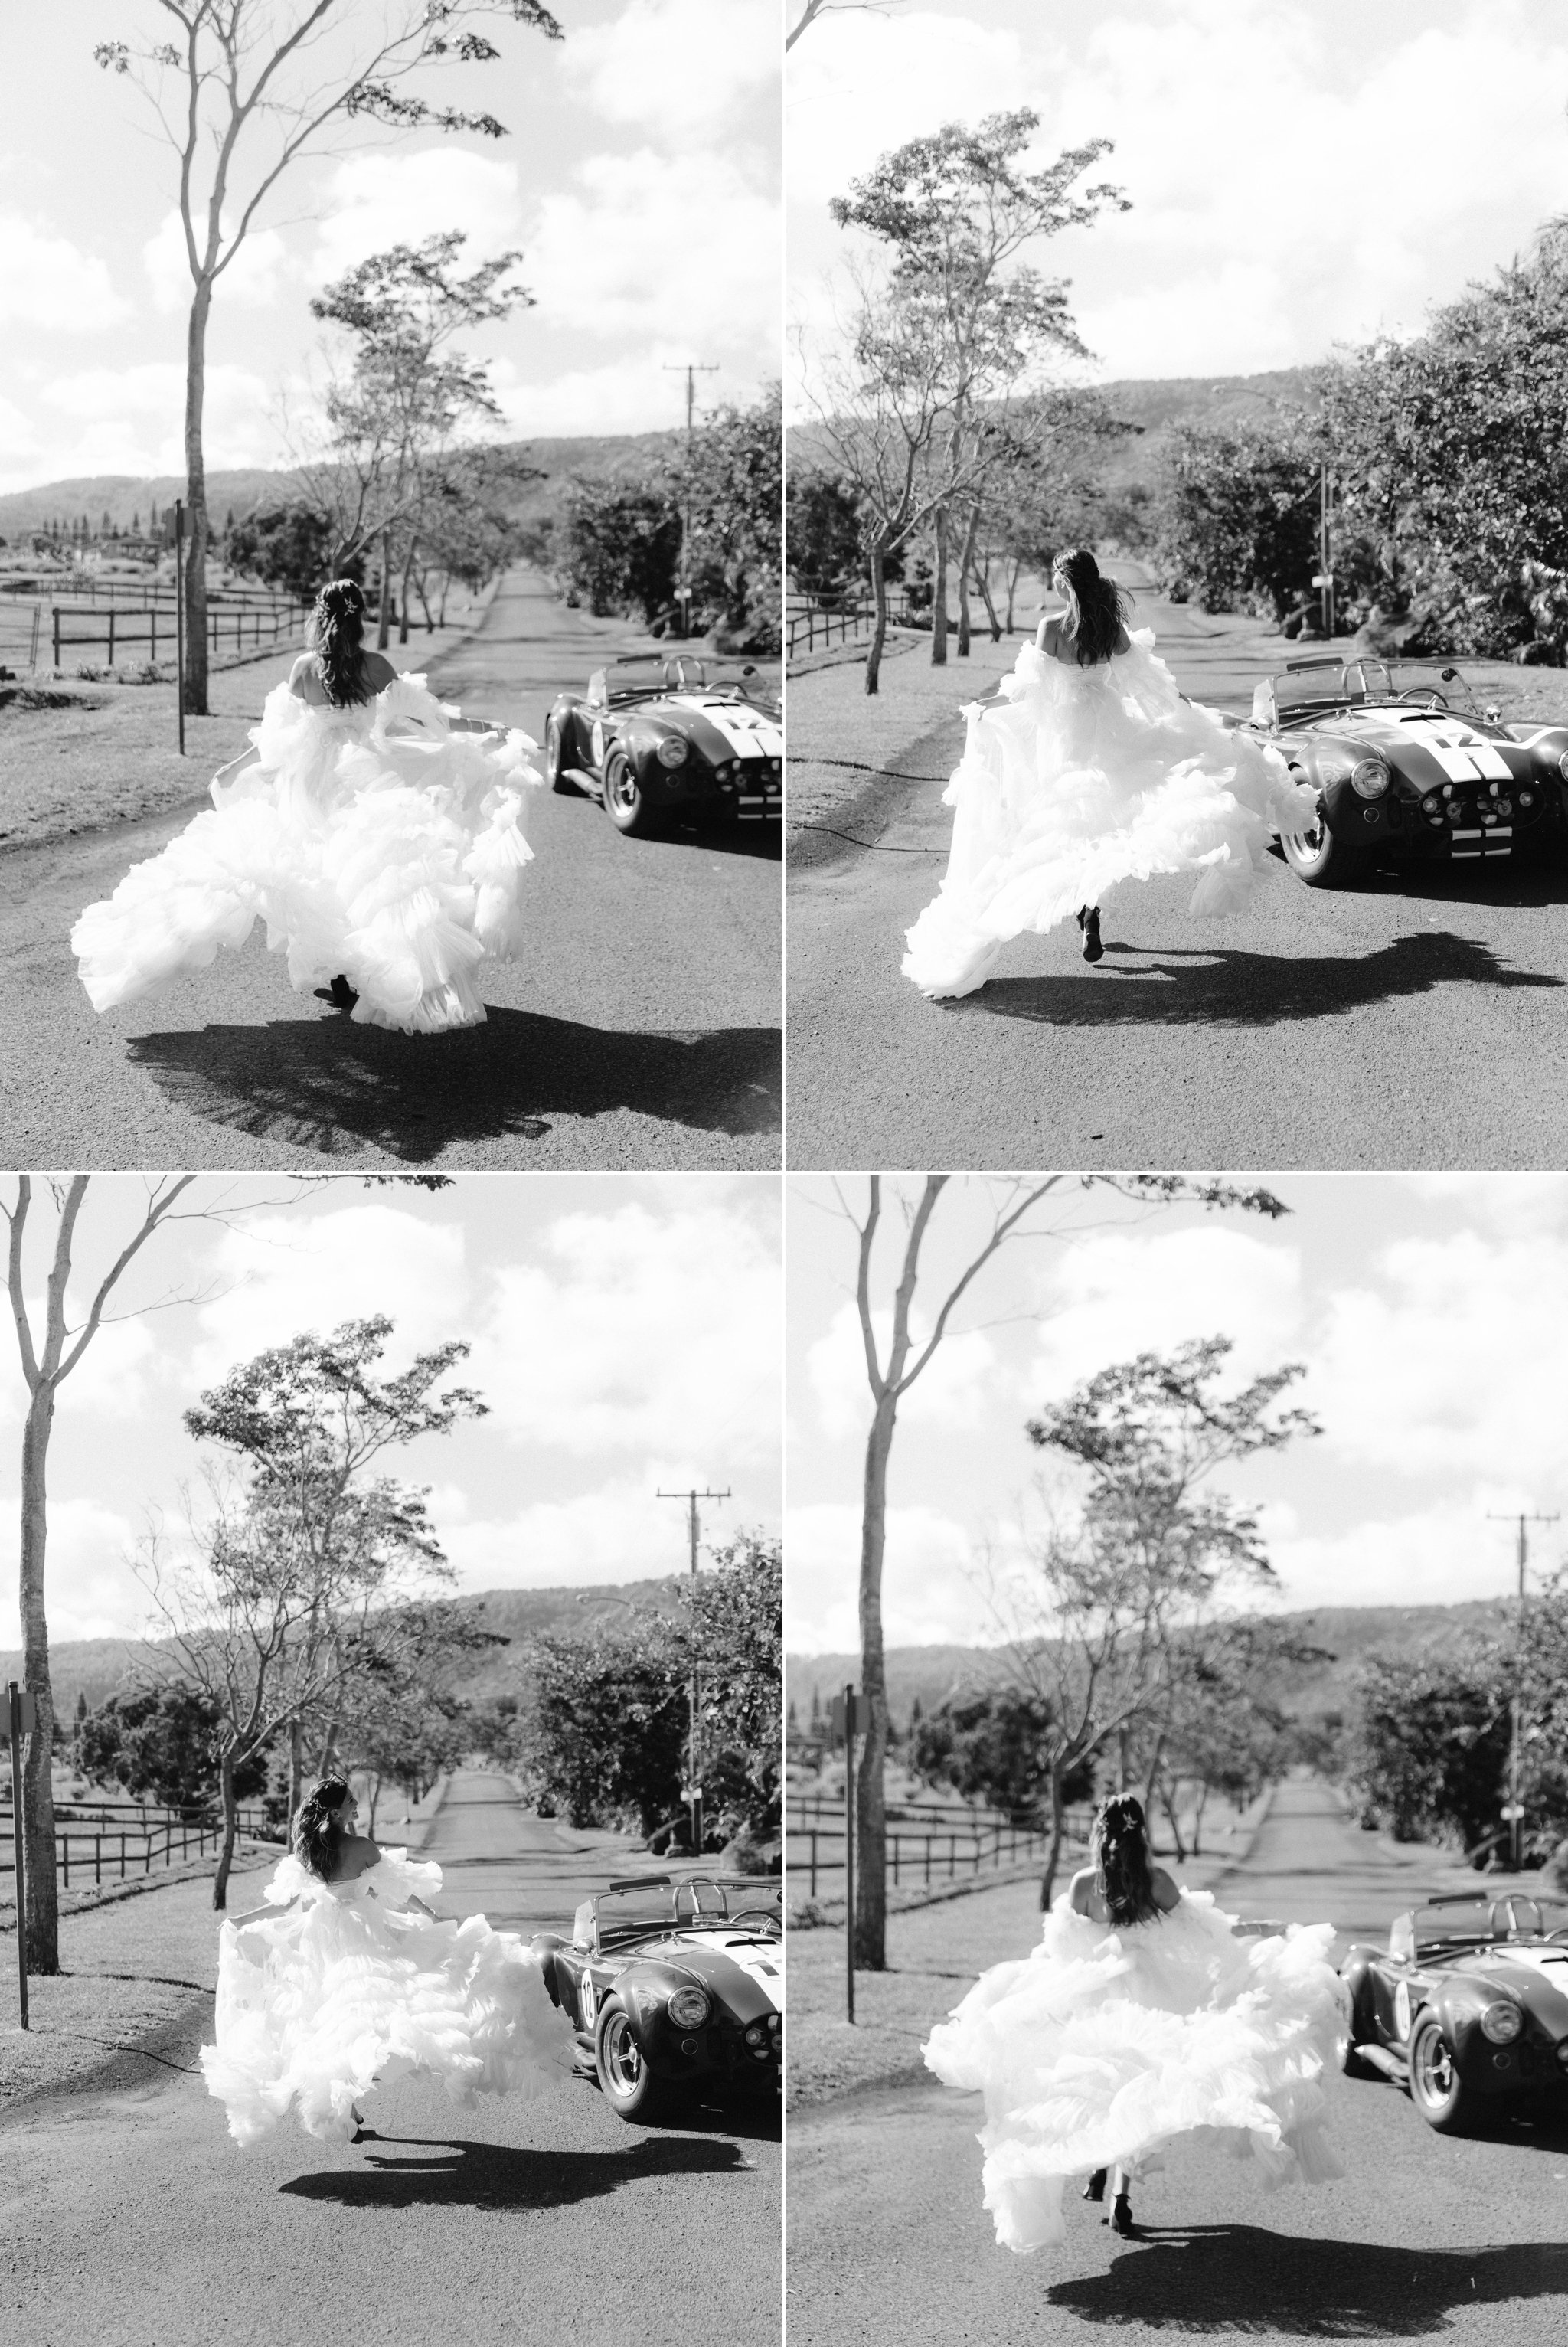 Luxury Wedding Inspiration at an Orchard - The Farm at Kaimea Estates - Oahu, Hawaii Photographer